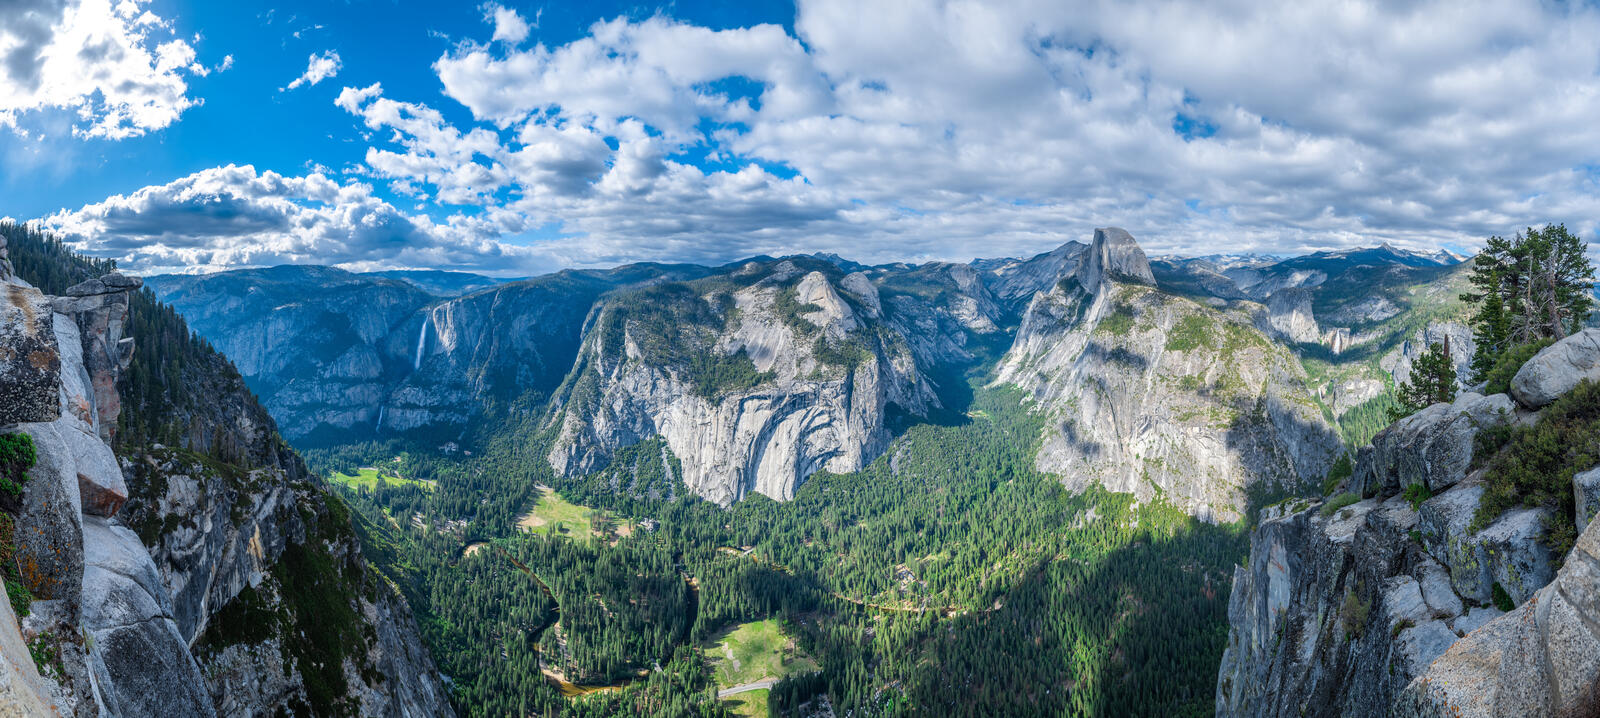 Wallpapers Yosemite mountains california u s nature on the desktop